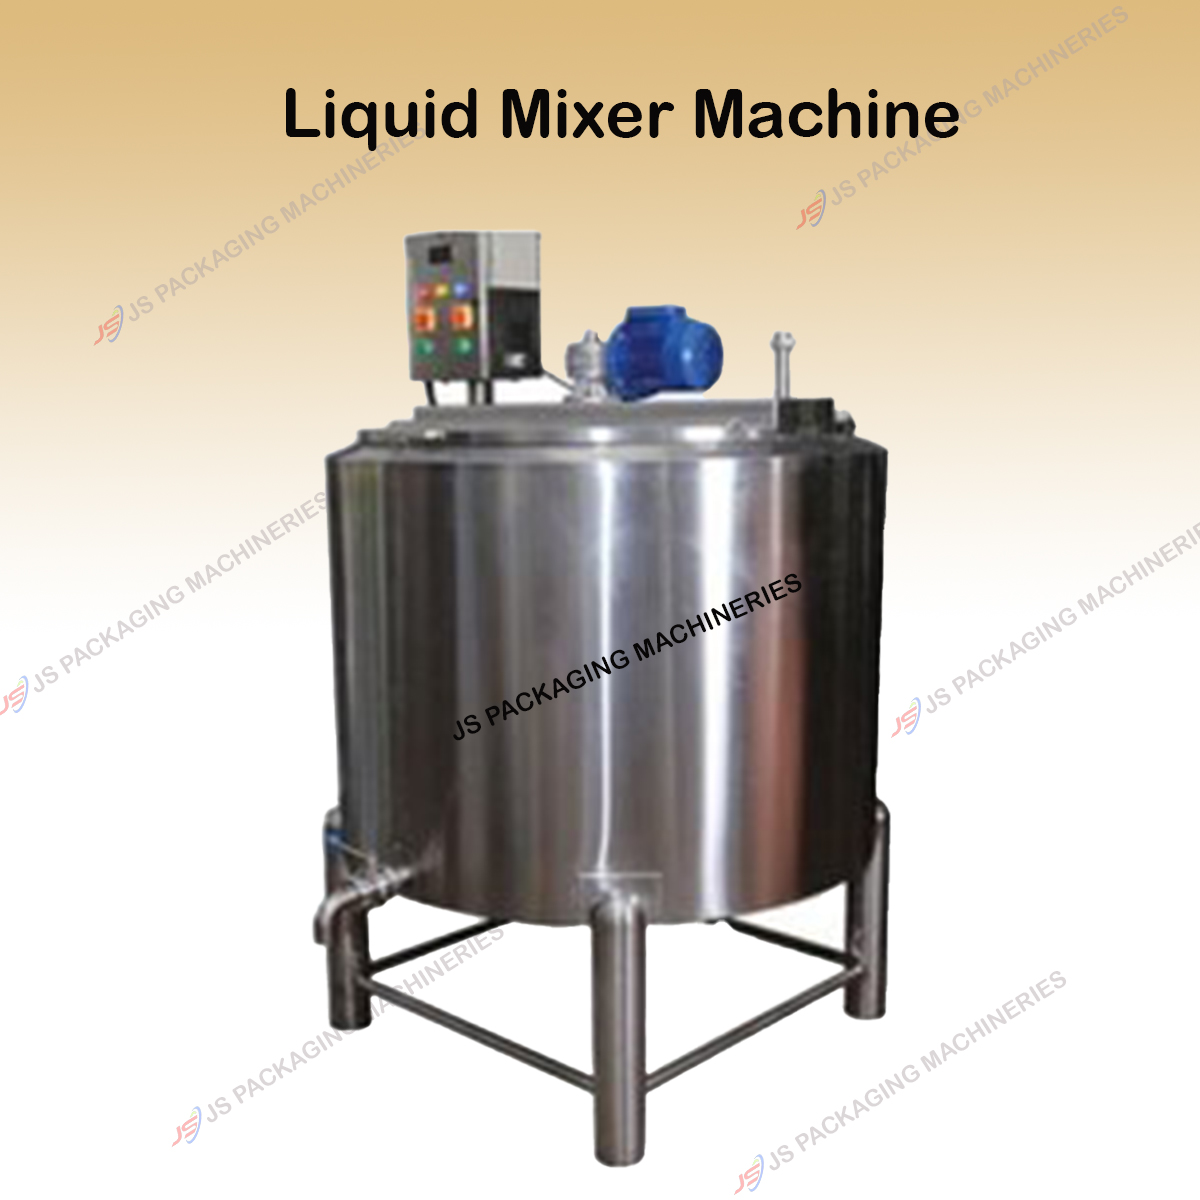 Liquid Mixer Machine